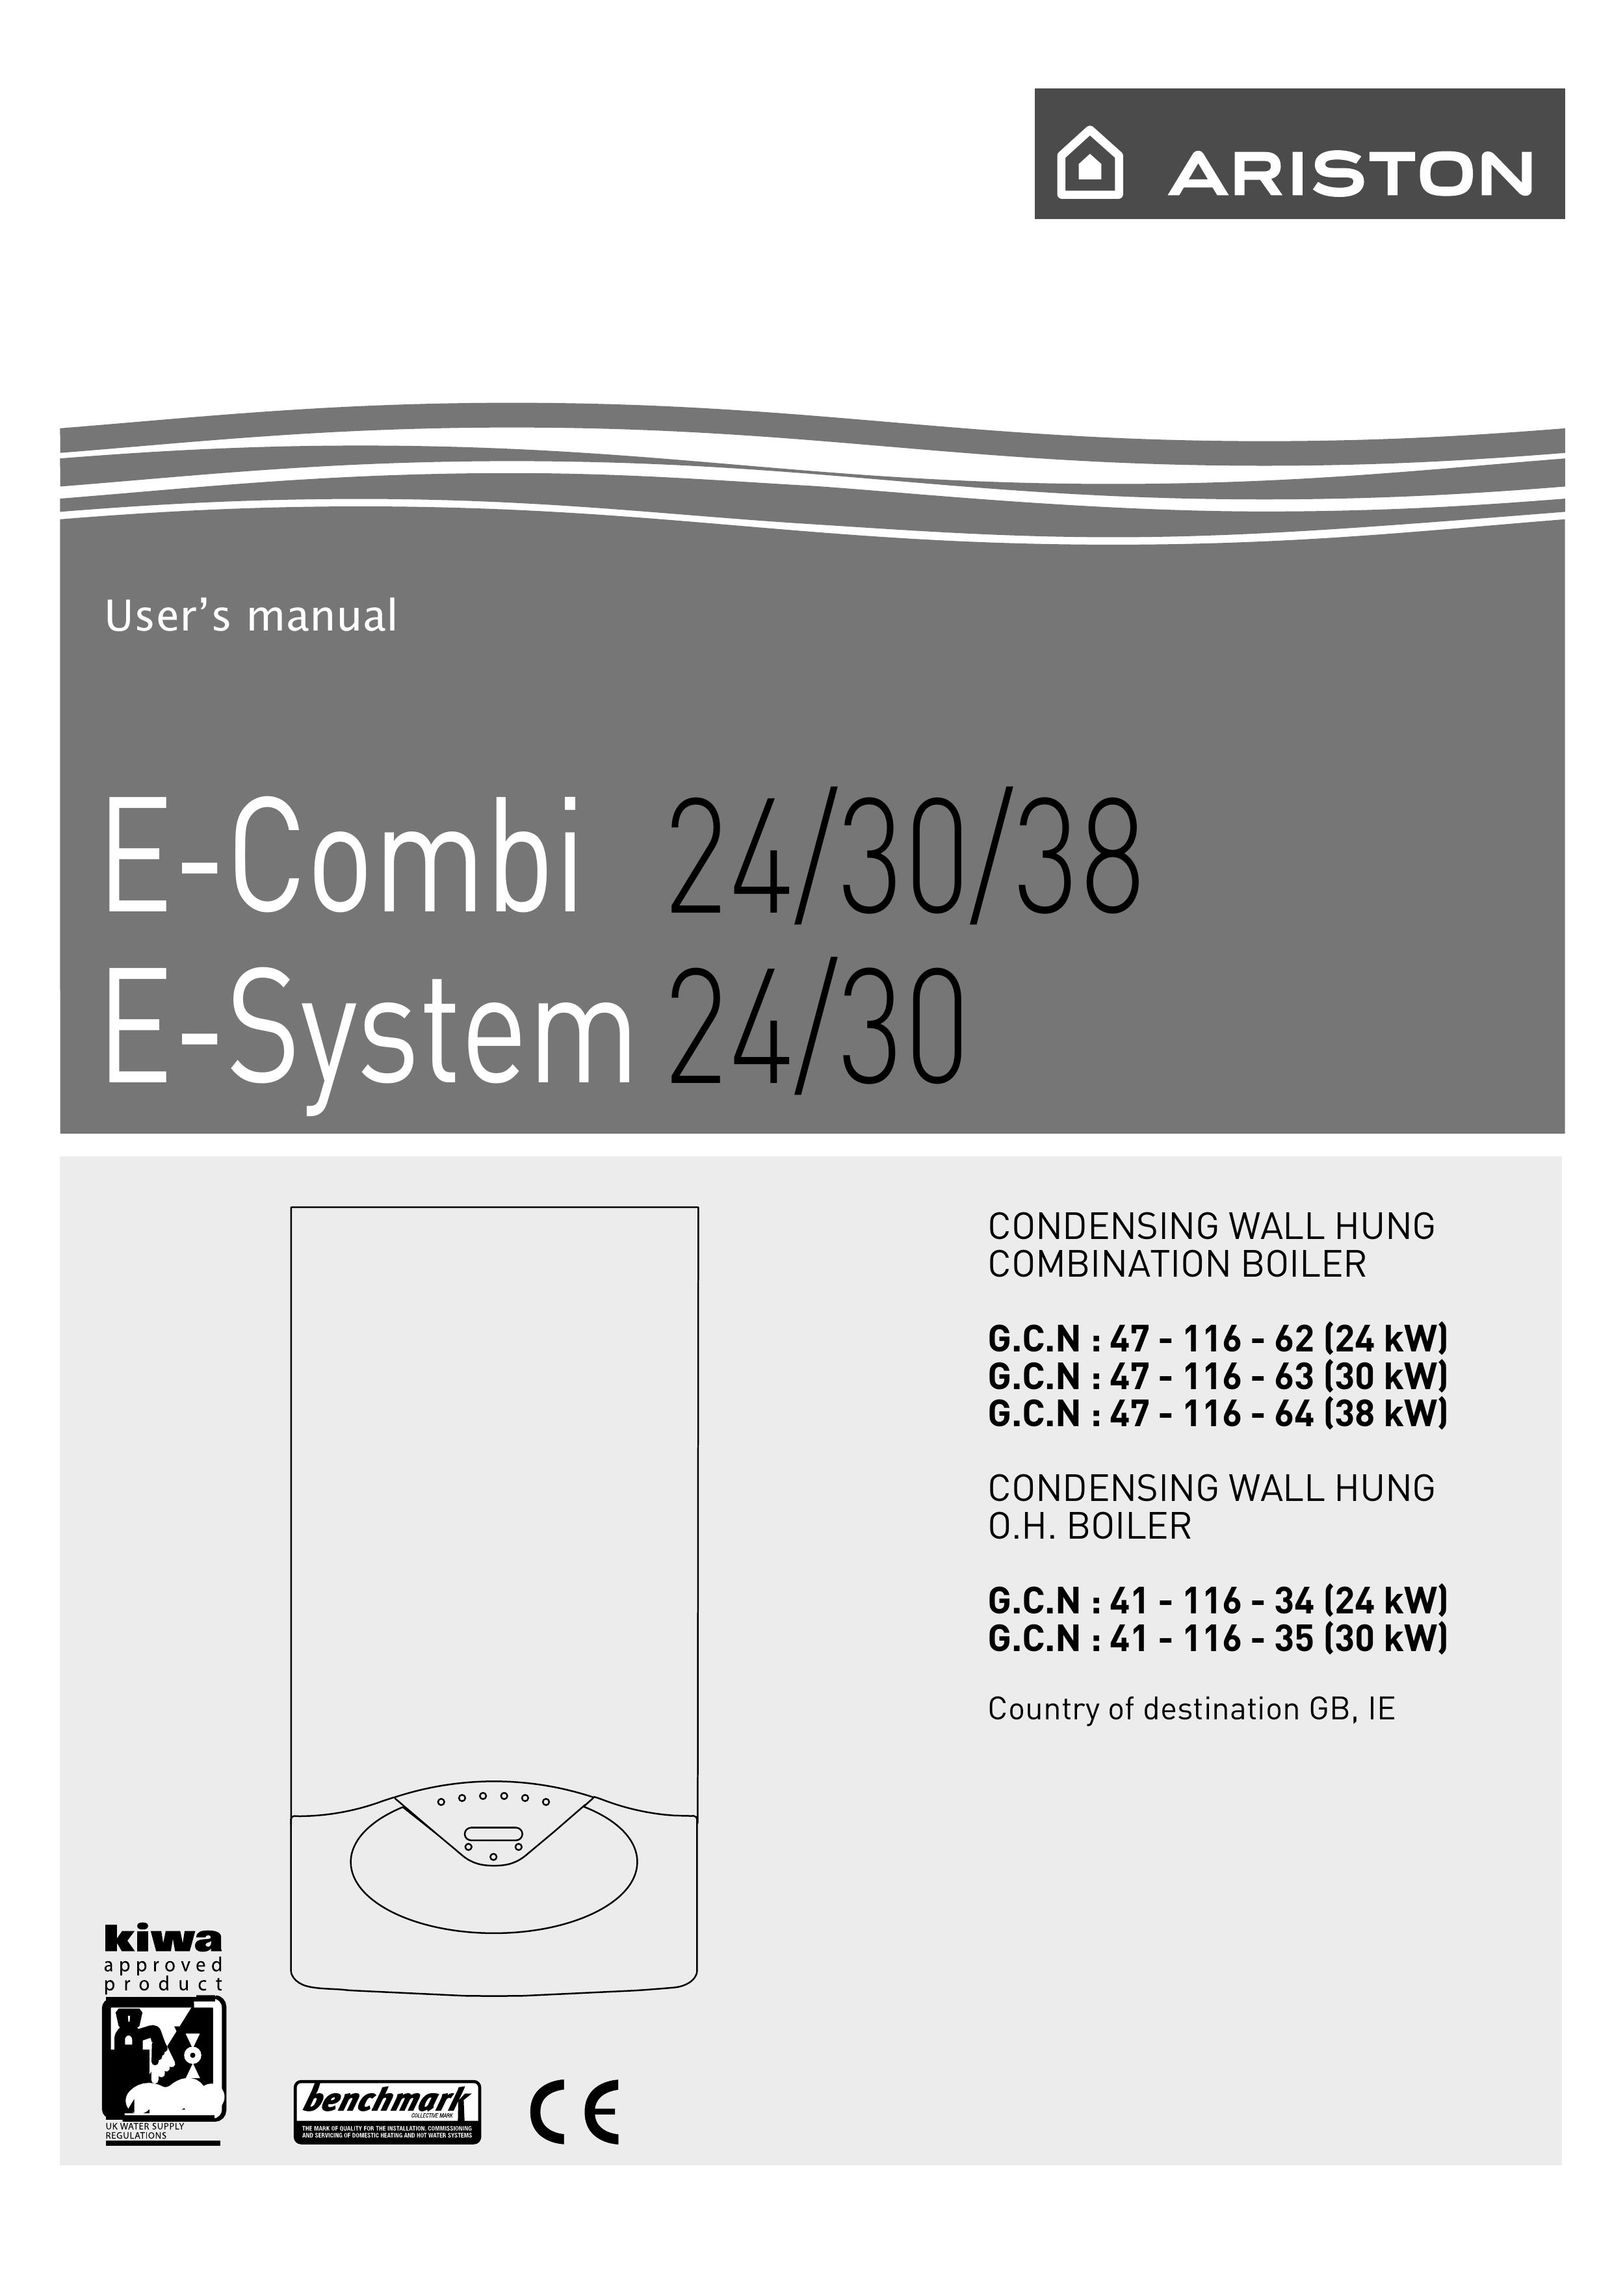 Ariston 41 - 116 - 35 Boiler User Manual